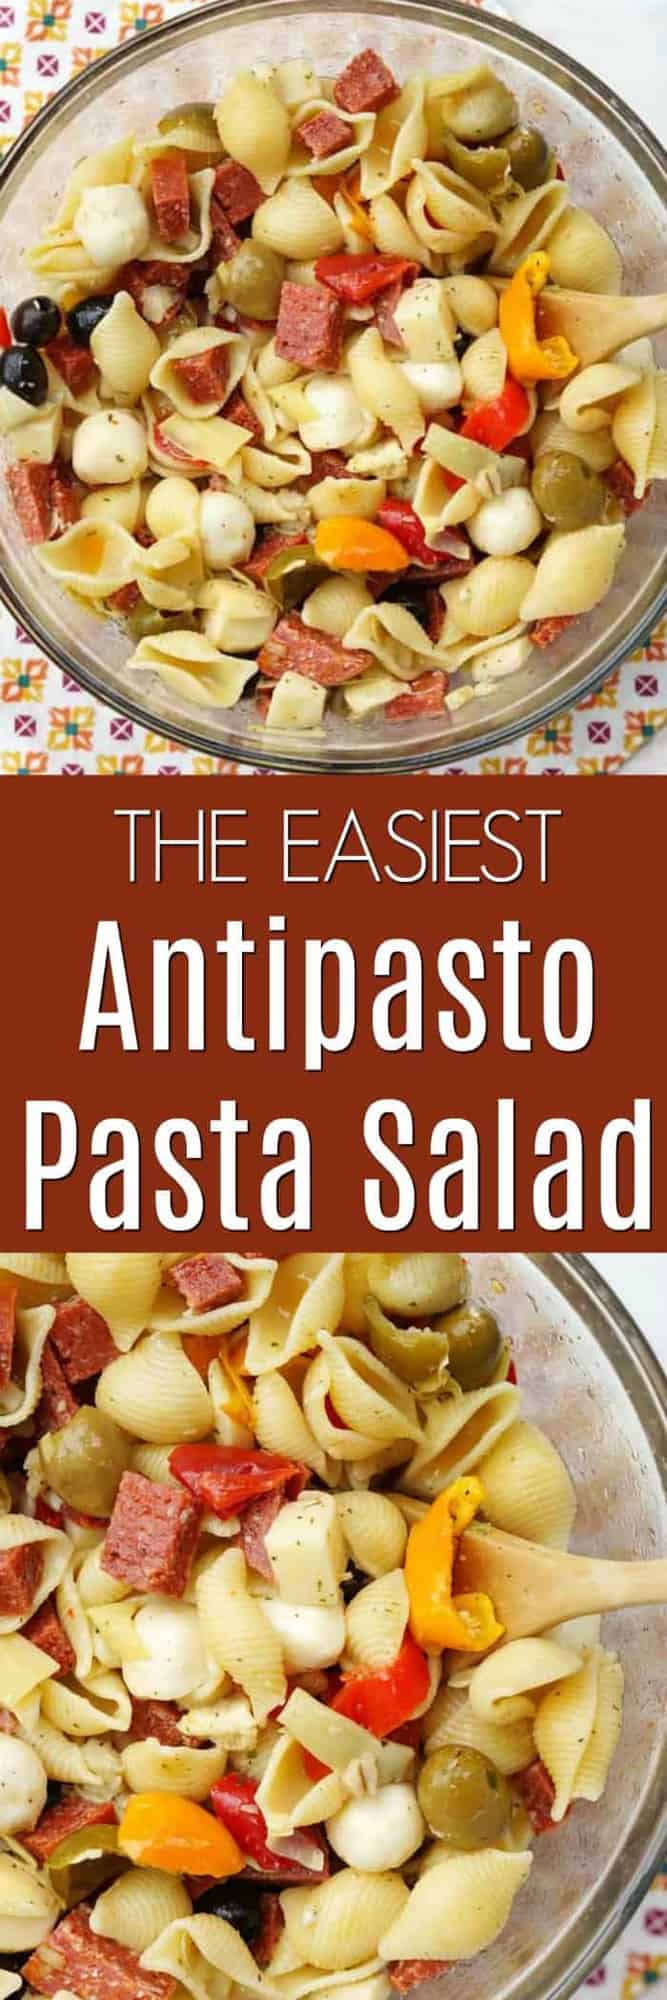 A Pinterest image for antipasto pasta salad